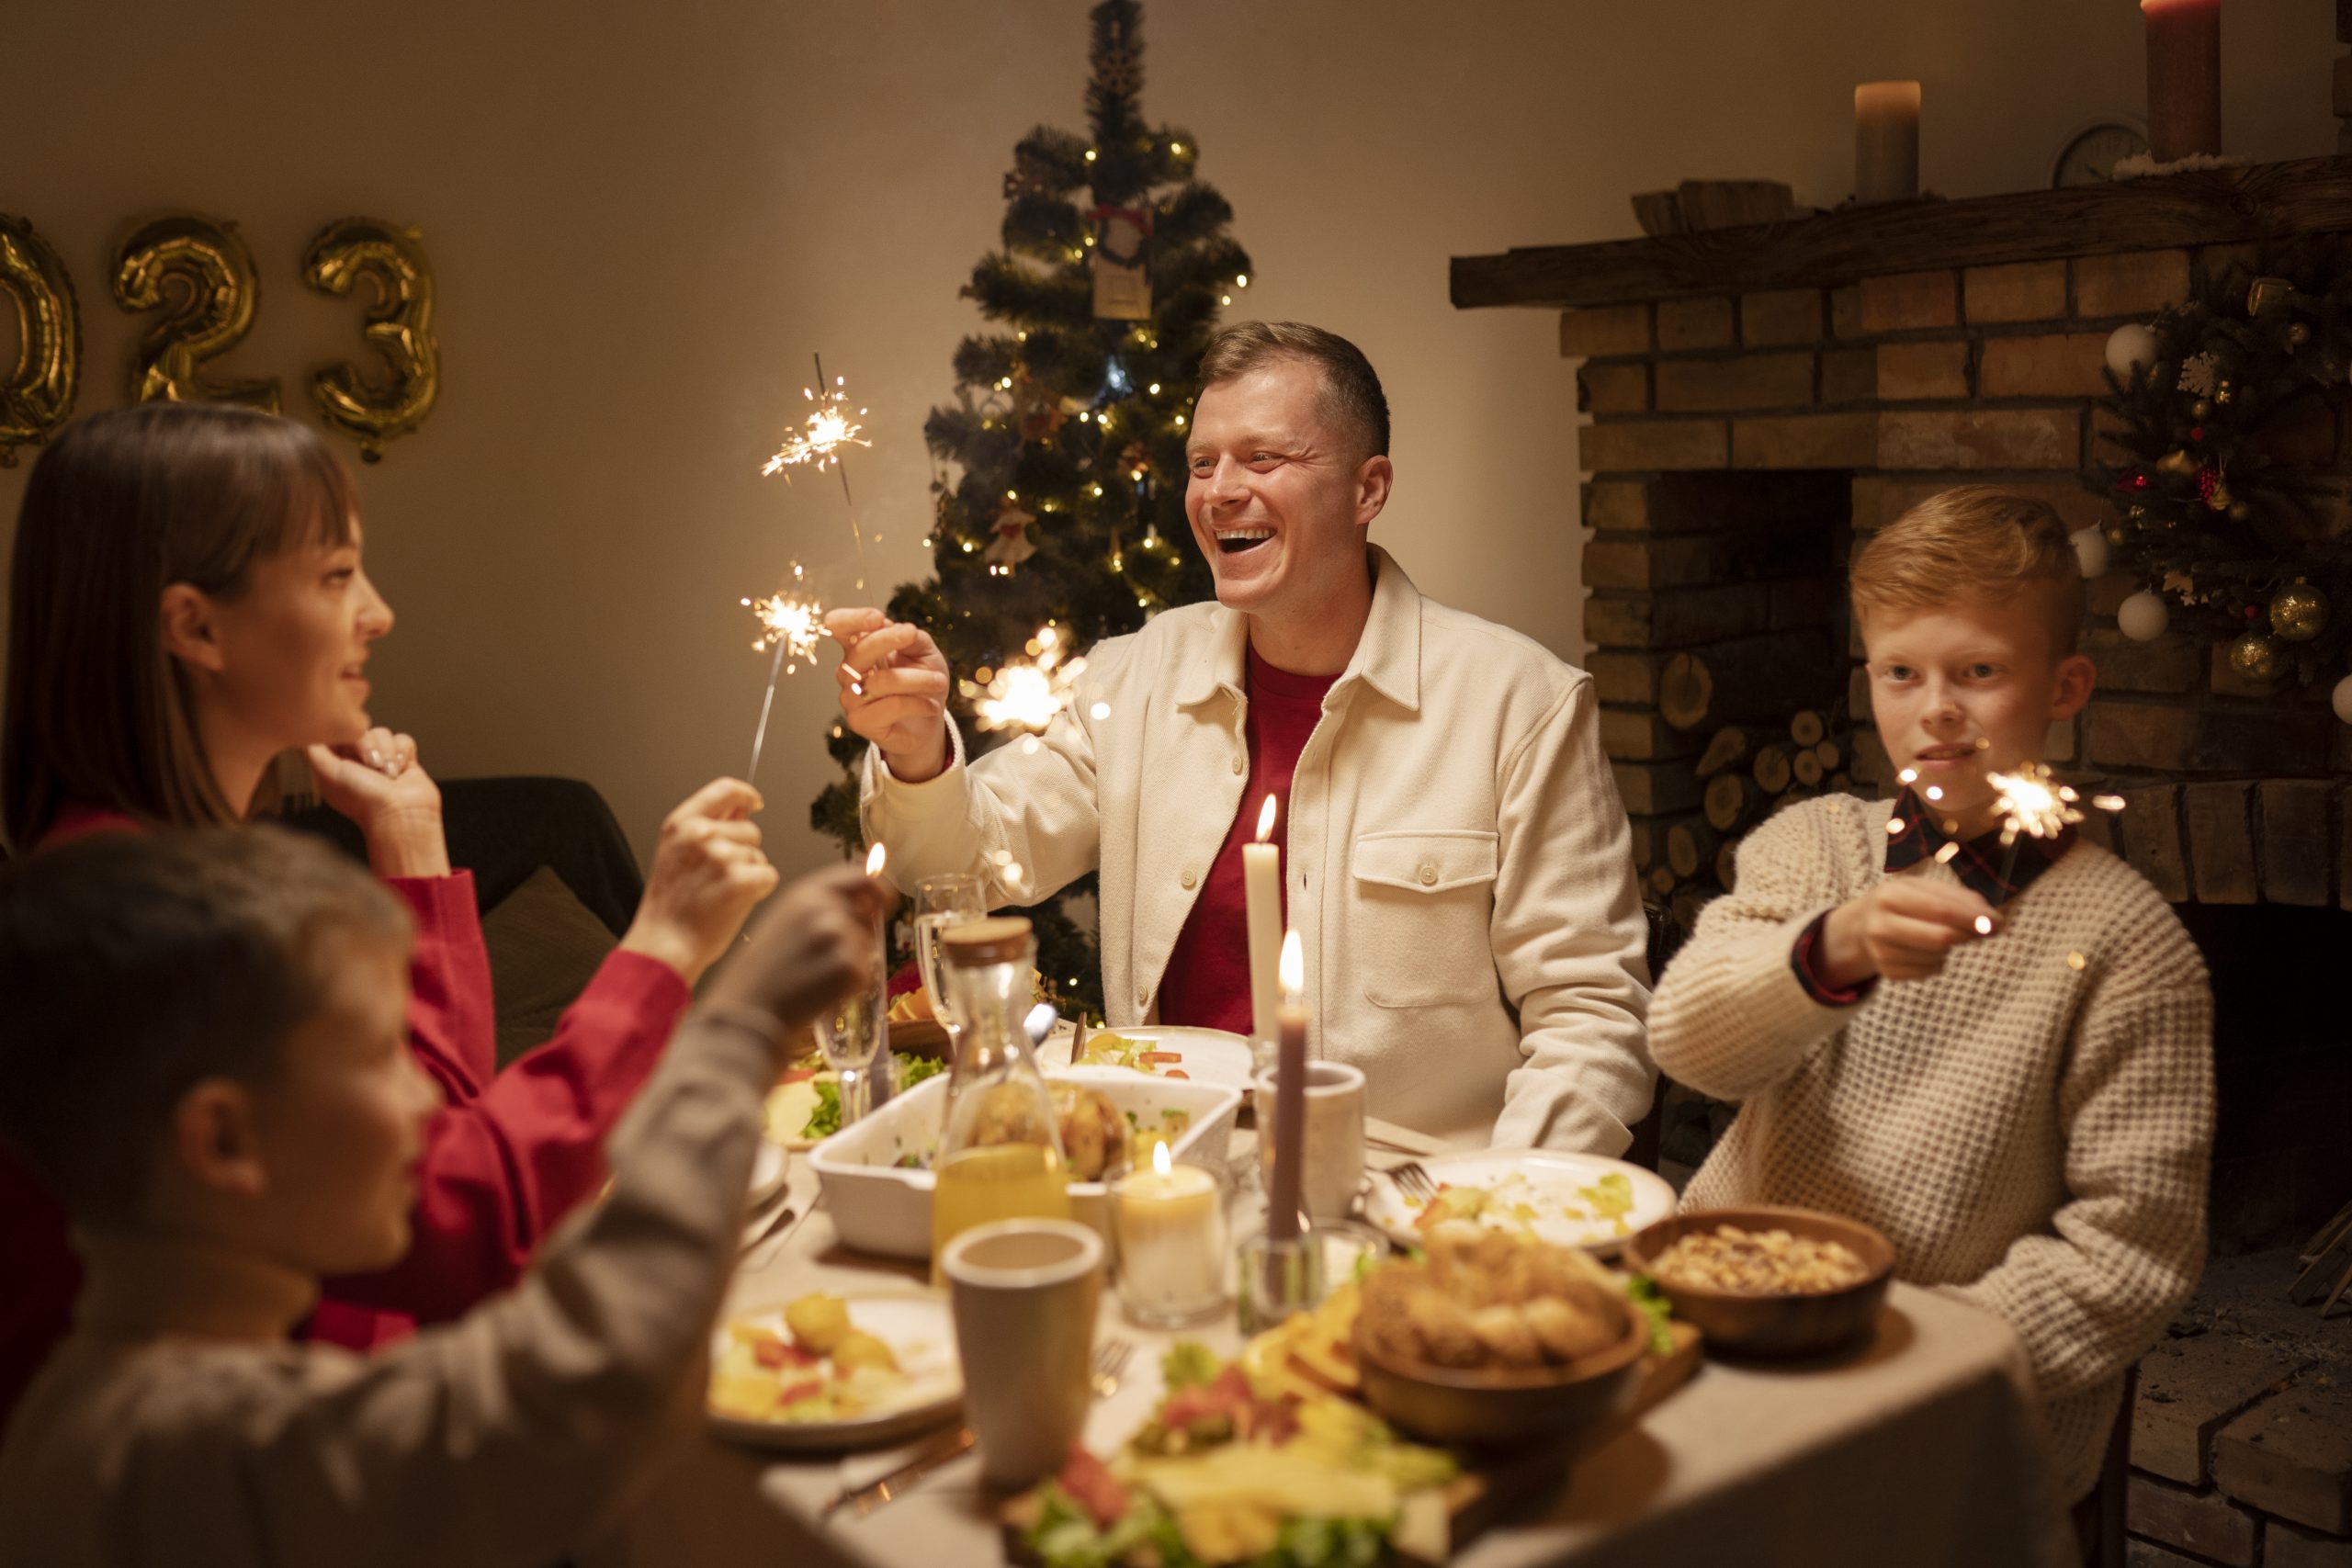 A joyful family celebrates with sparklers at a festive dinner table near a Christmas tree. 